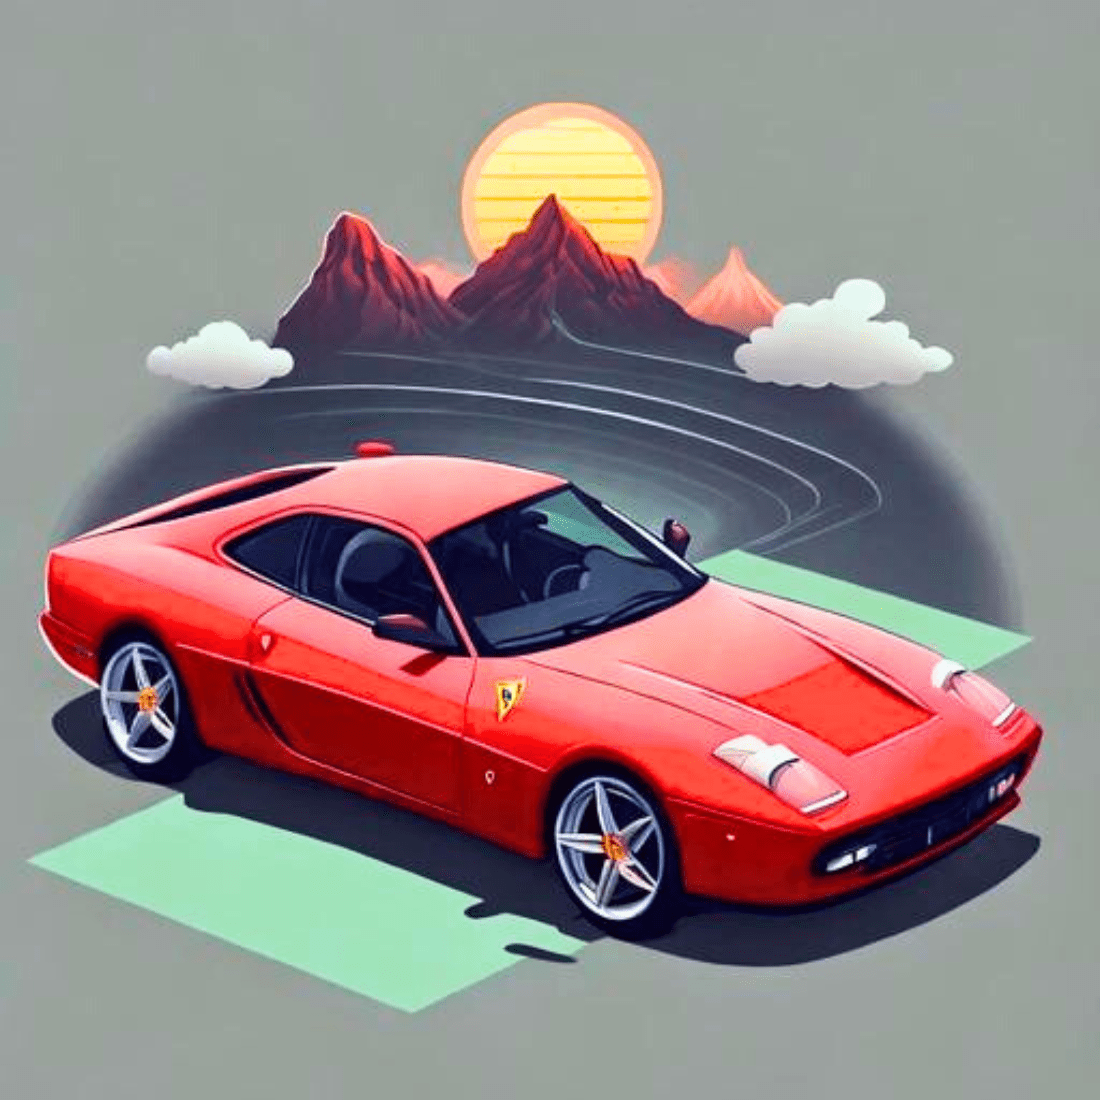 T-Shirt Ferrari design high detailed cover image.